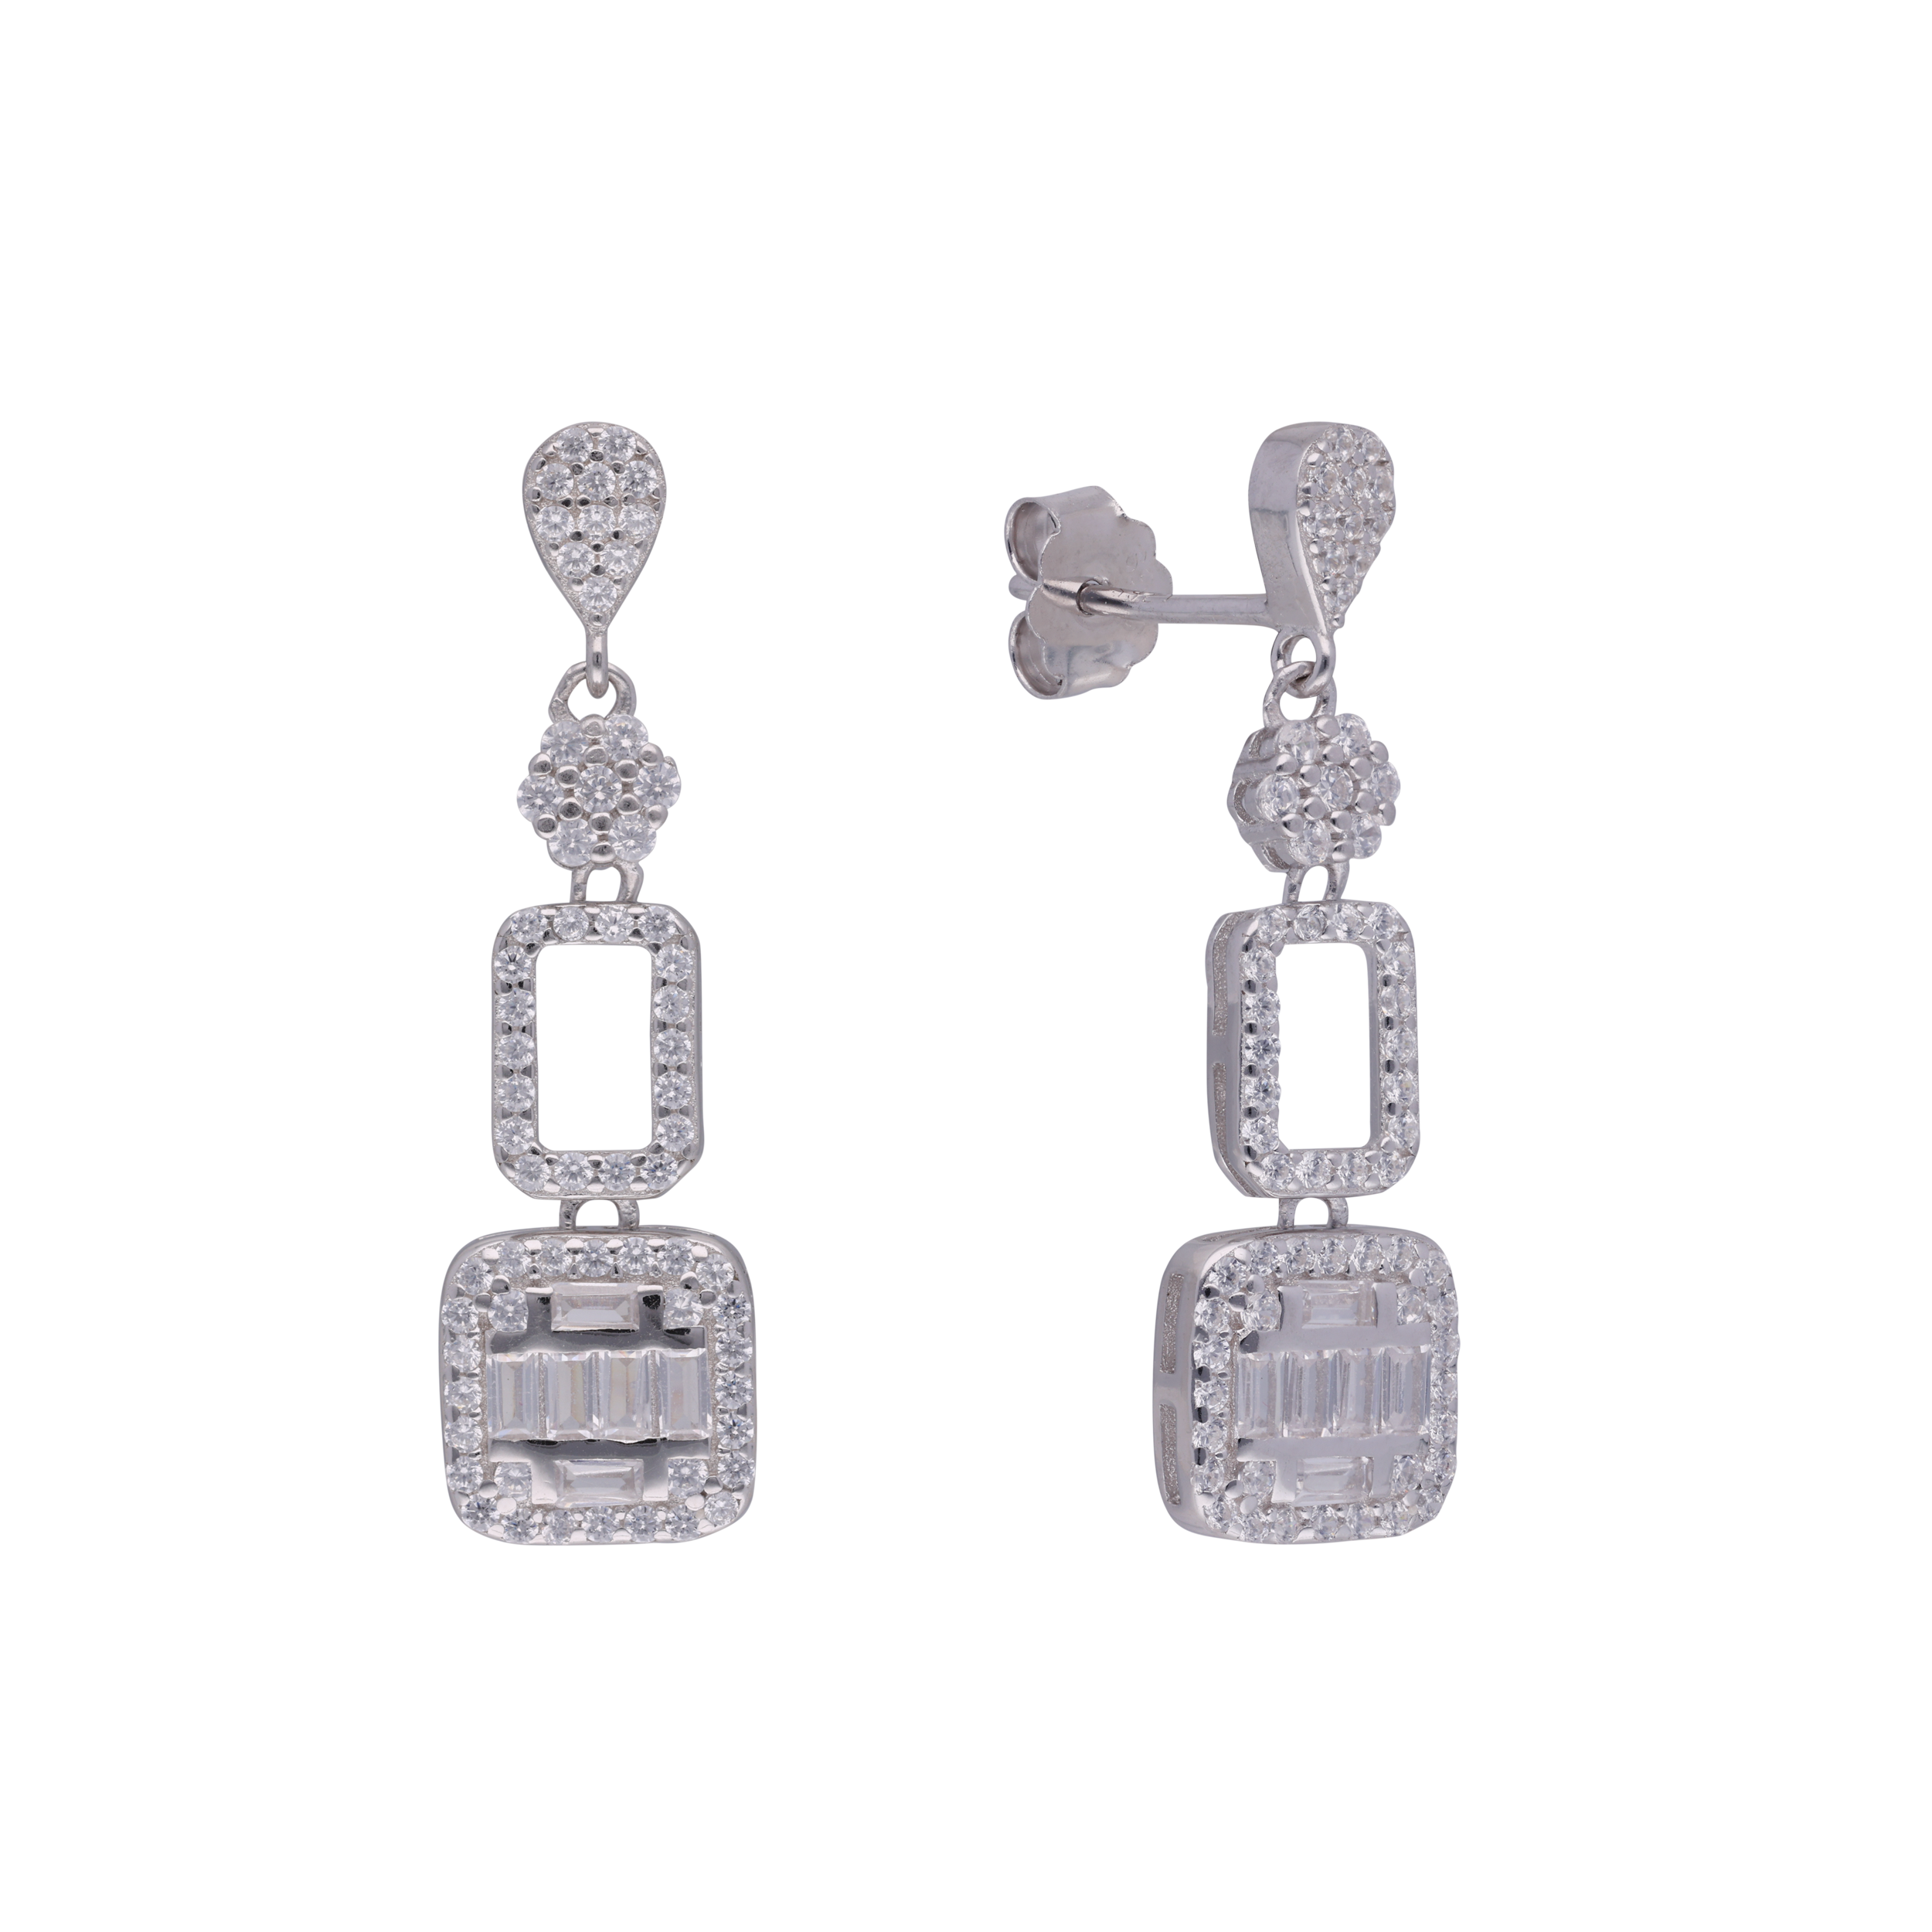 Designer Silver Royal Drop Earrings | SKU: 0019281155, 0019281209, 0019280943, 0019280936